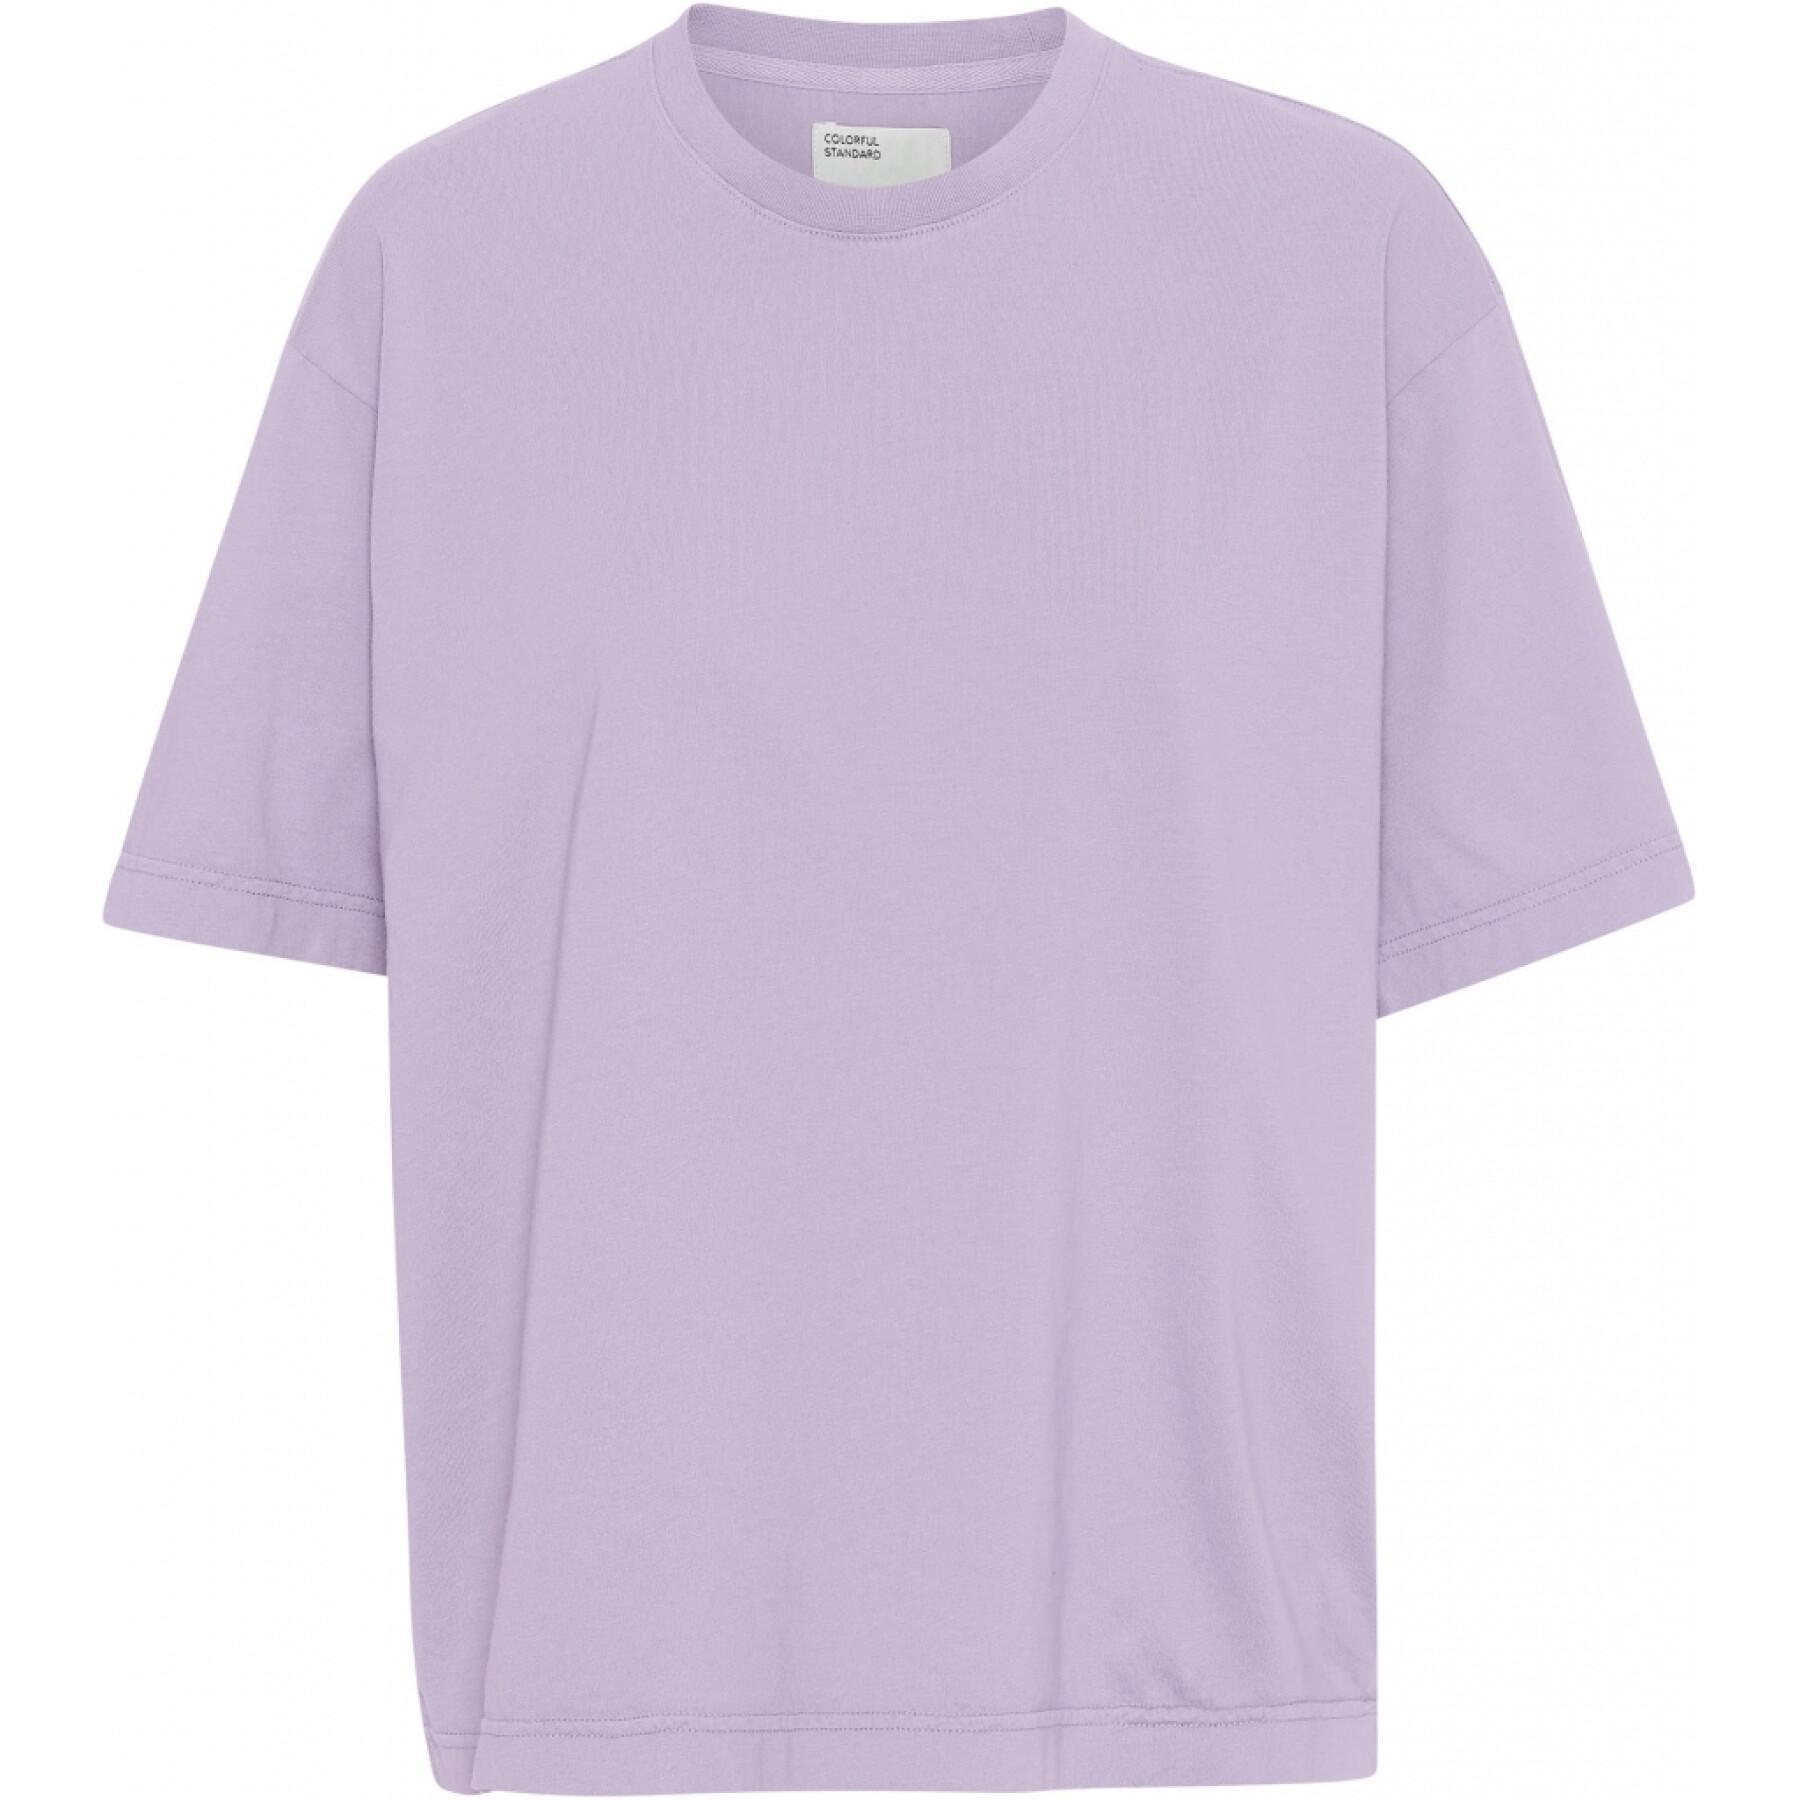 Women's T-shirt Colorful Standard Organic oversized soft lavender